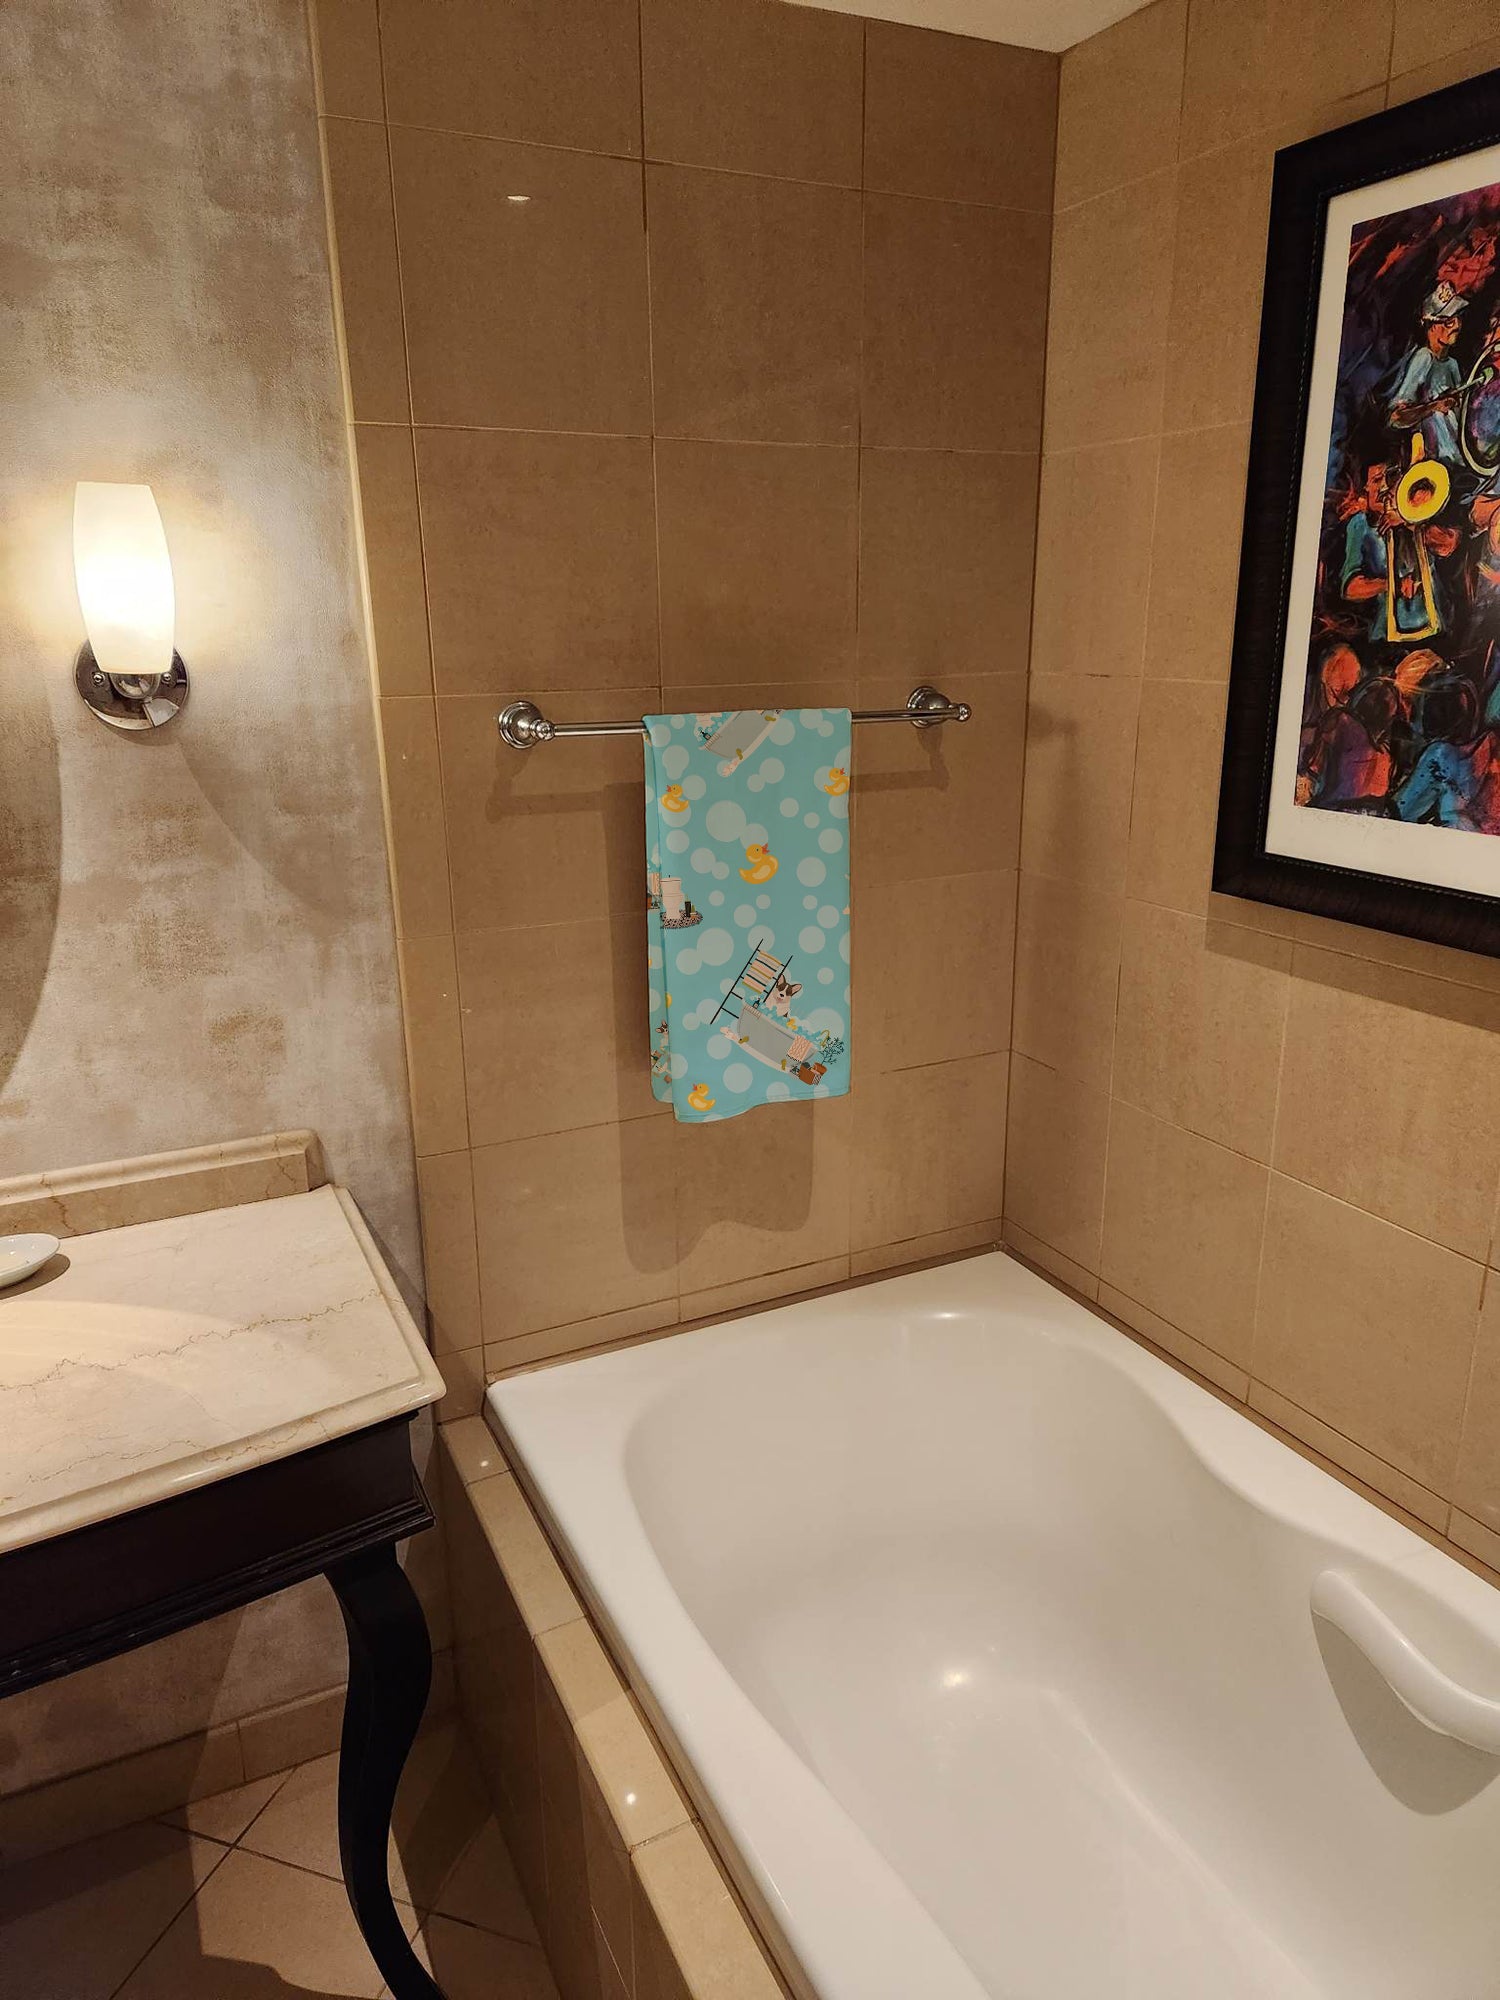 Brindle Cardigan Corgi Bath Towel Large